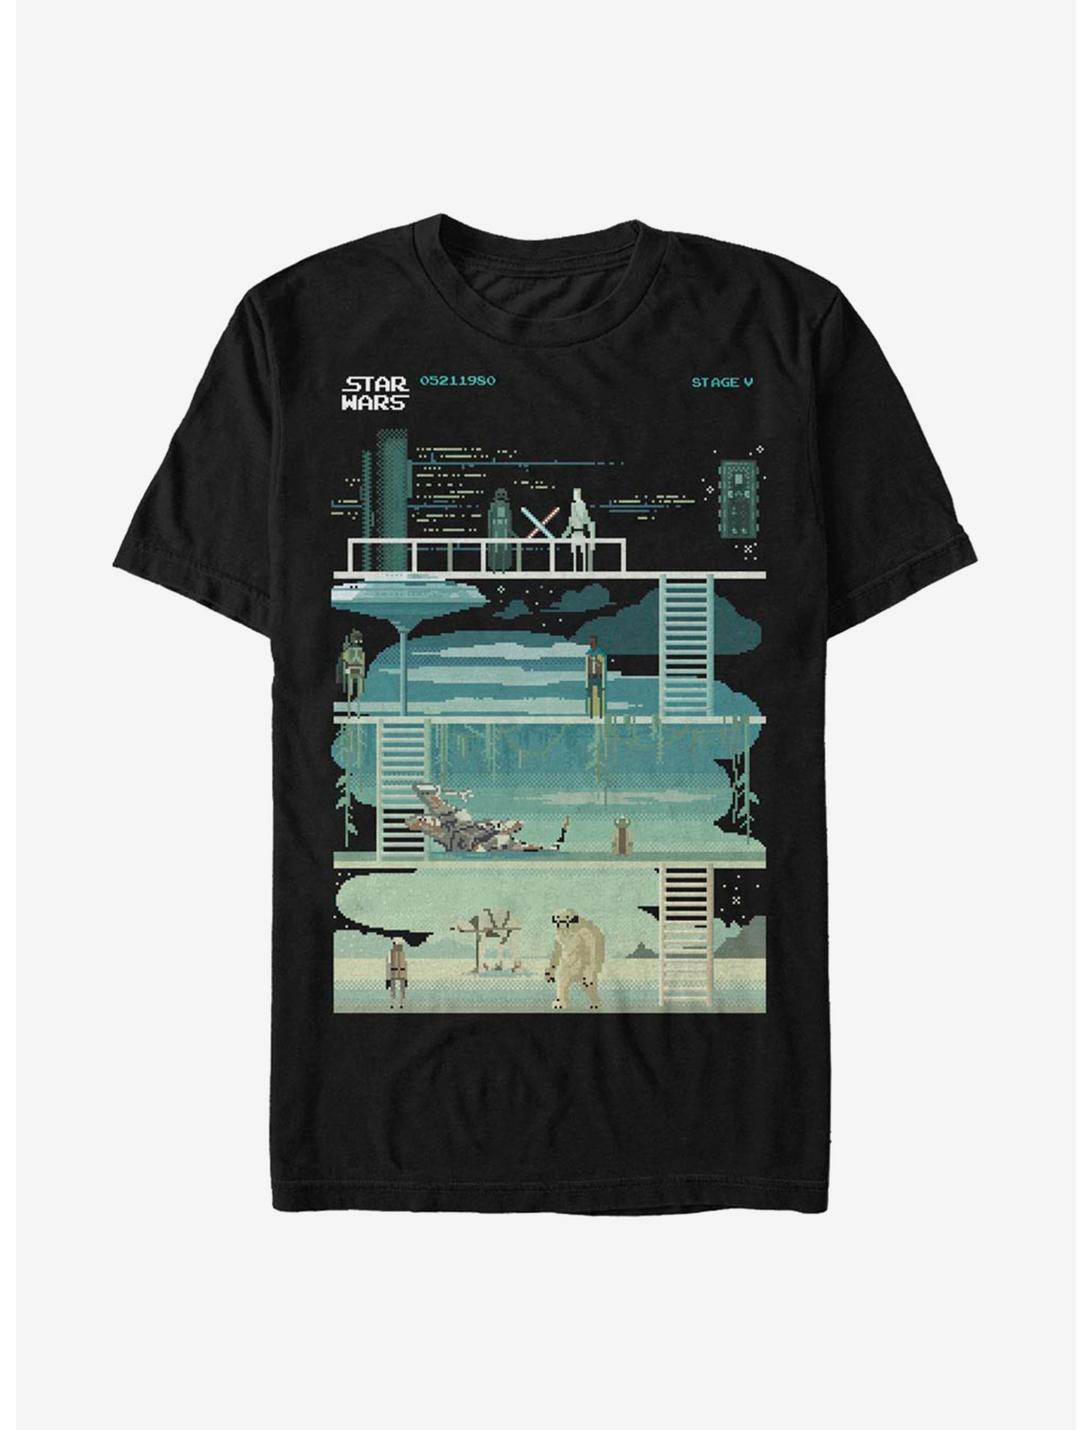 Star Wars The Empire Strikes Back 8 Bit T-Shirt, BLACK, hi-res